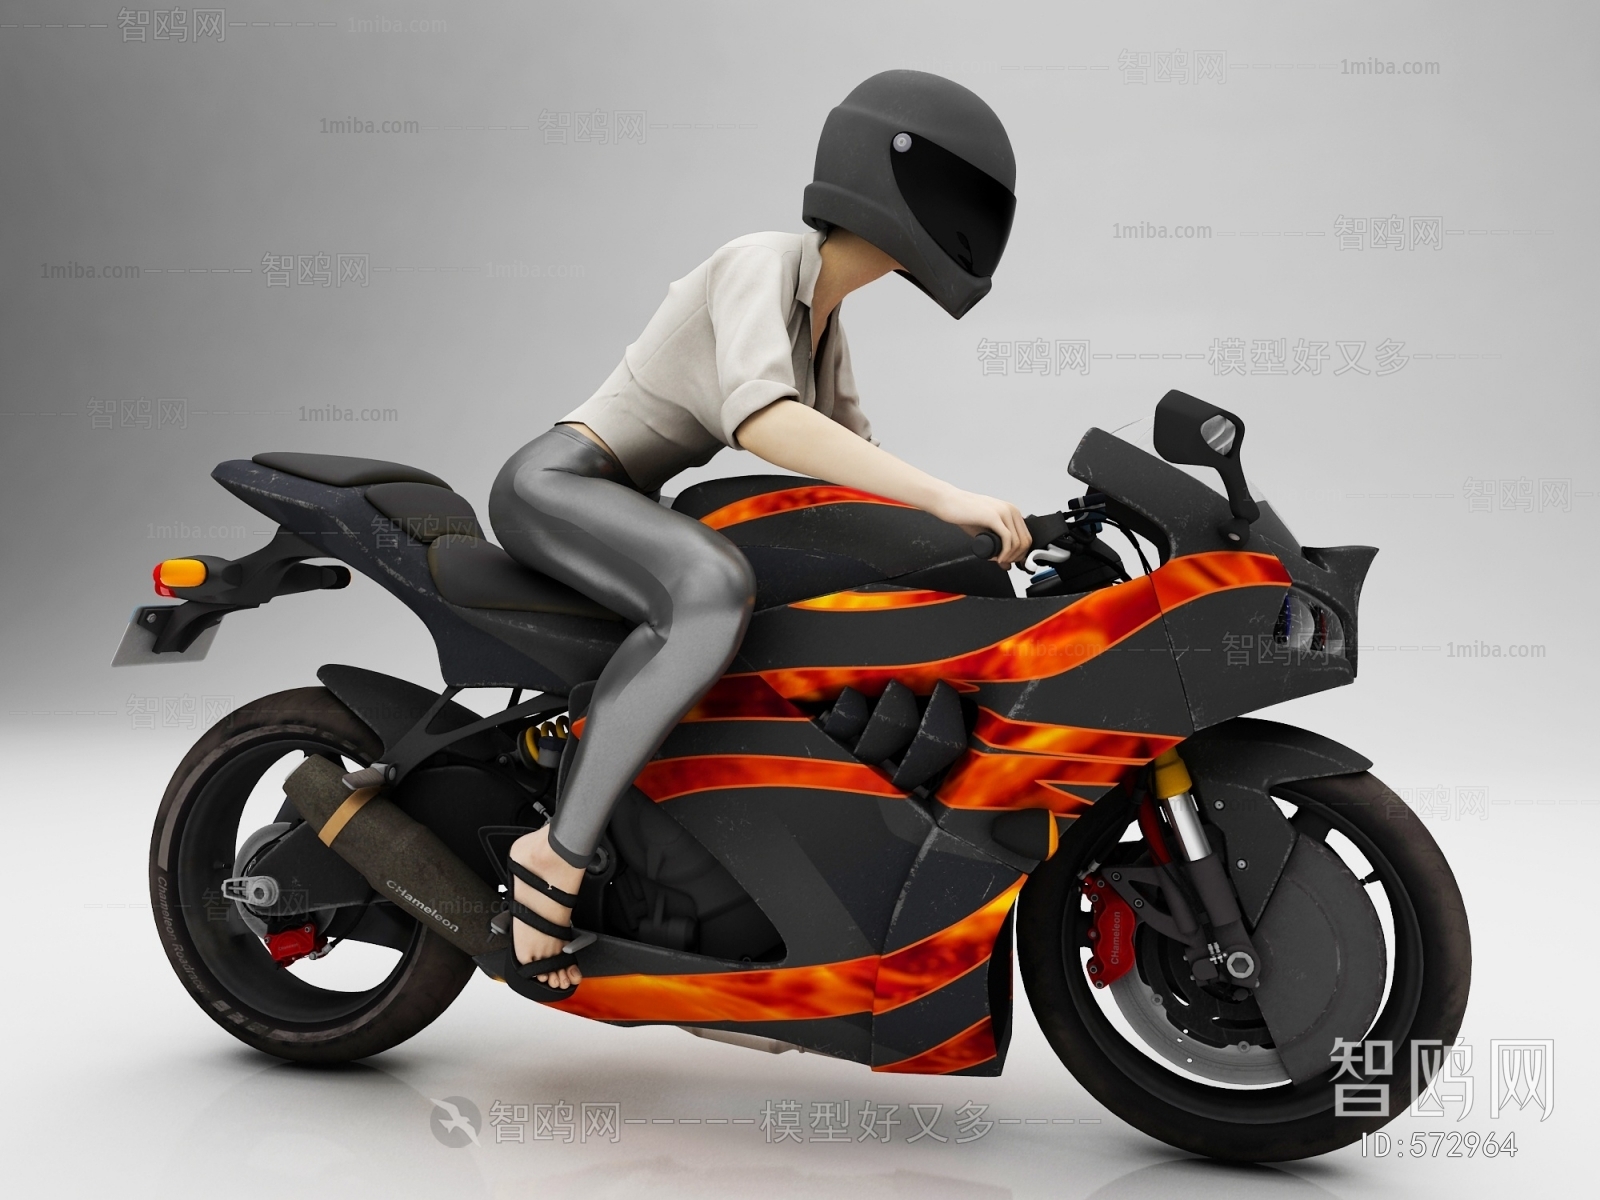 Modern Motorcycle